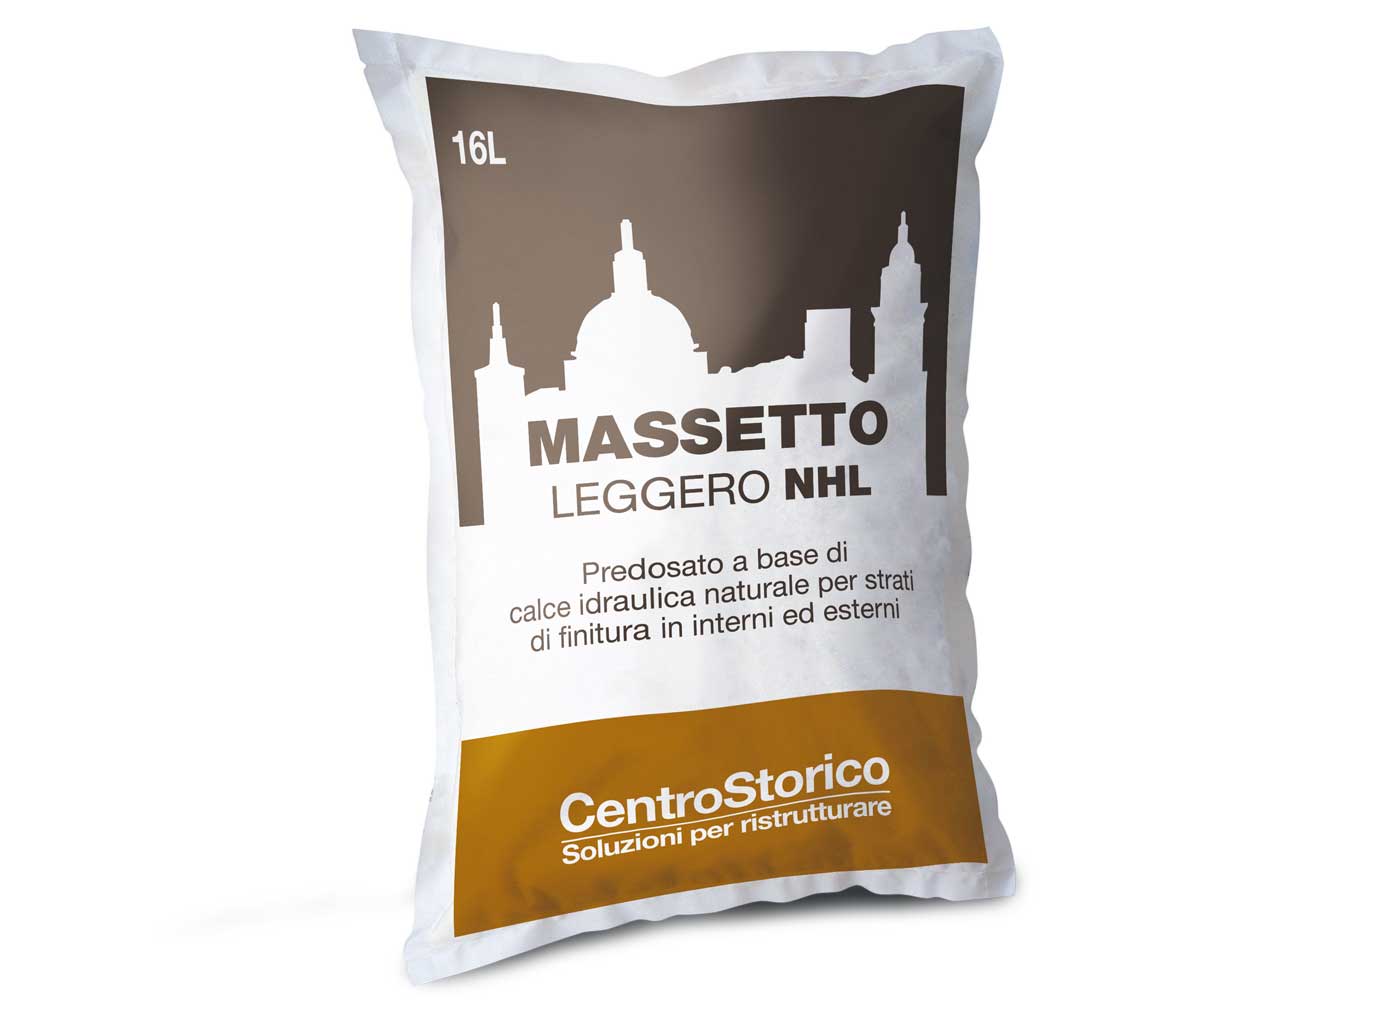 sacco-massetto-leggero-NHL